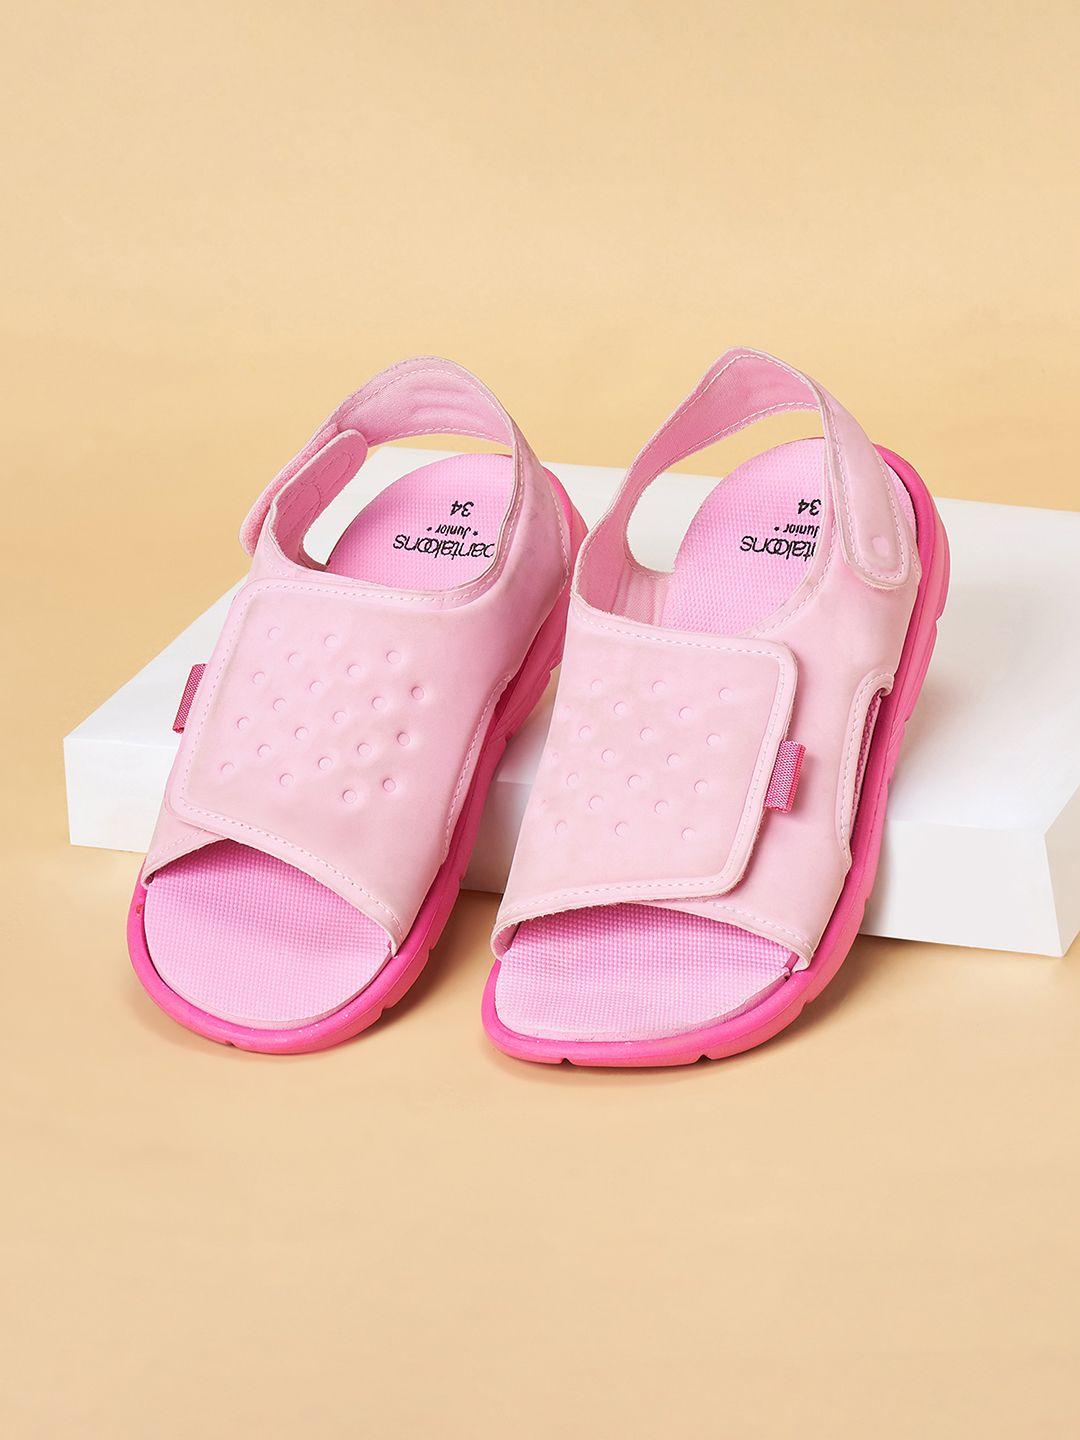 pantaloons junior girls pink open toe flats